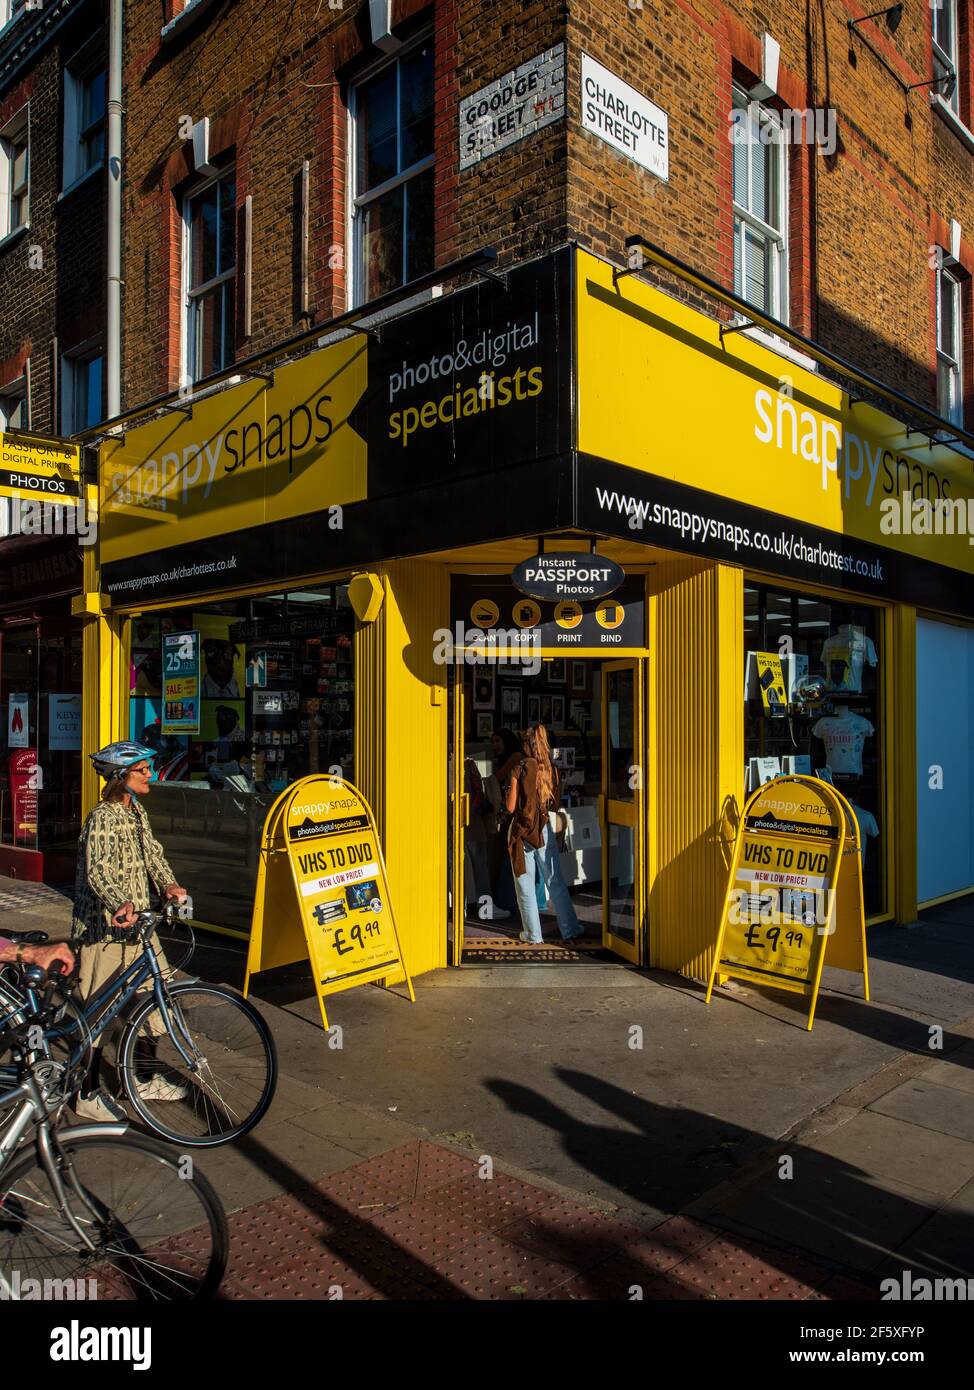 Snappy Snaps Store London - Snappy Snaps Photography Shop London all'angolo tra Charlotte St e Goodge St nel quartiere Fitzrovia di C. London. Foto Stock